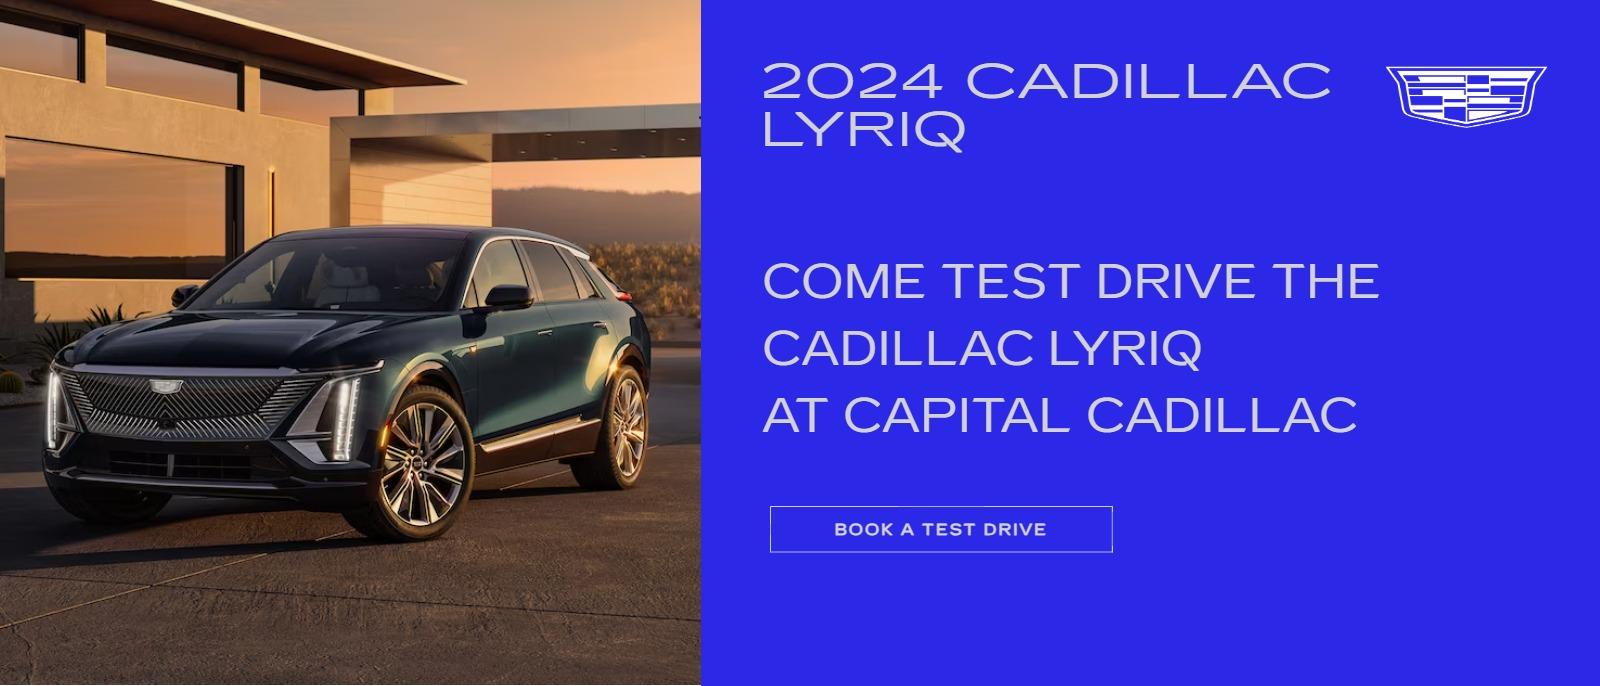 2024 Cadillac Lyriq 
COME TEST DRIVE THE CADILLAC LYRIQ
AT CAPITAL CADILLAC